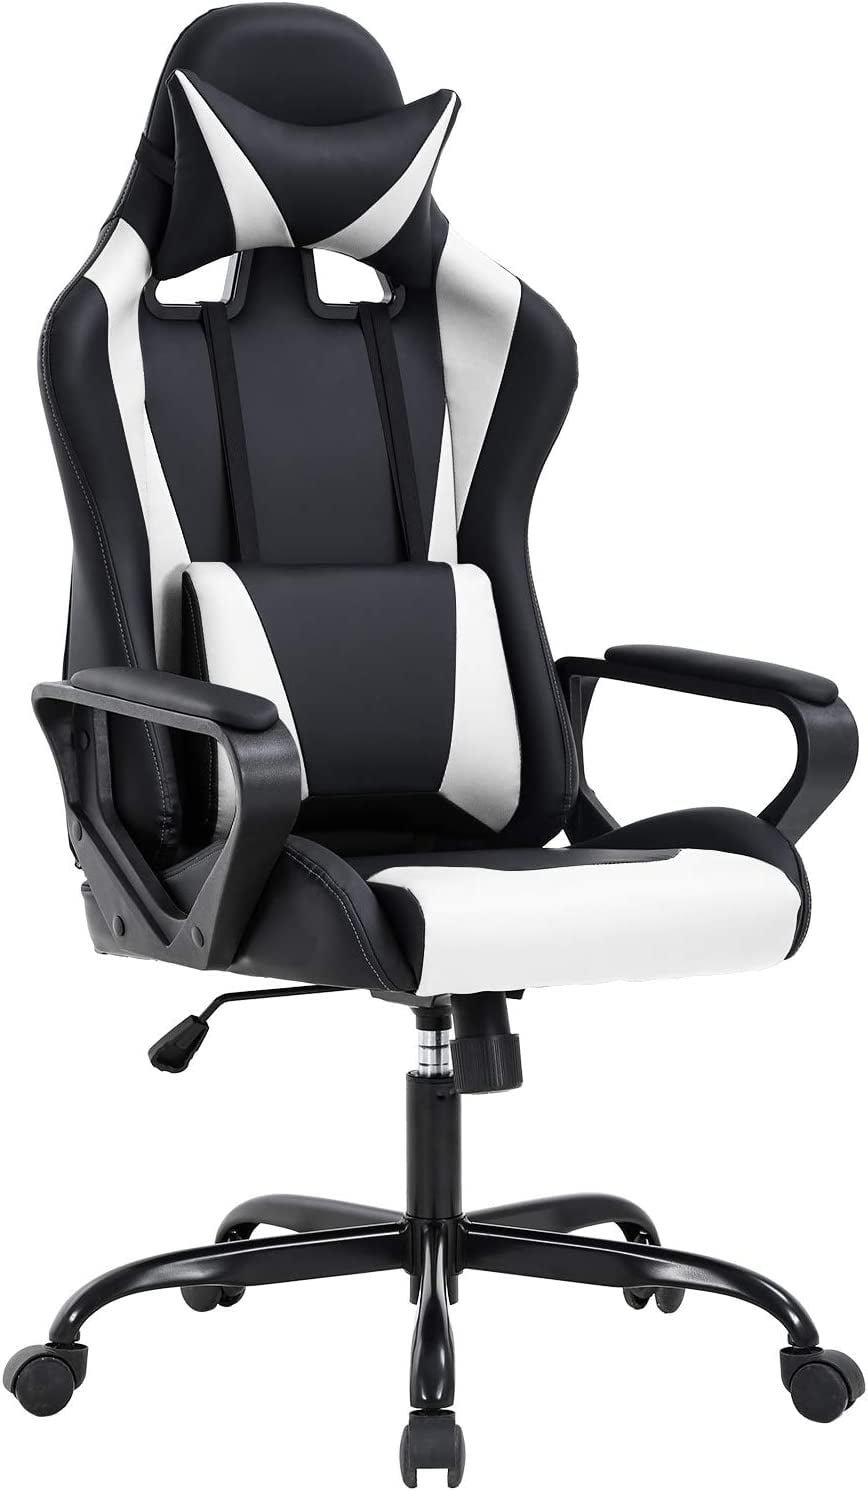 HOMCOM Racing Office Chair Gaming Swivel Computer Chair PU Leather 